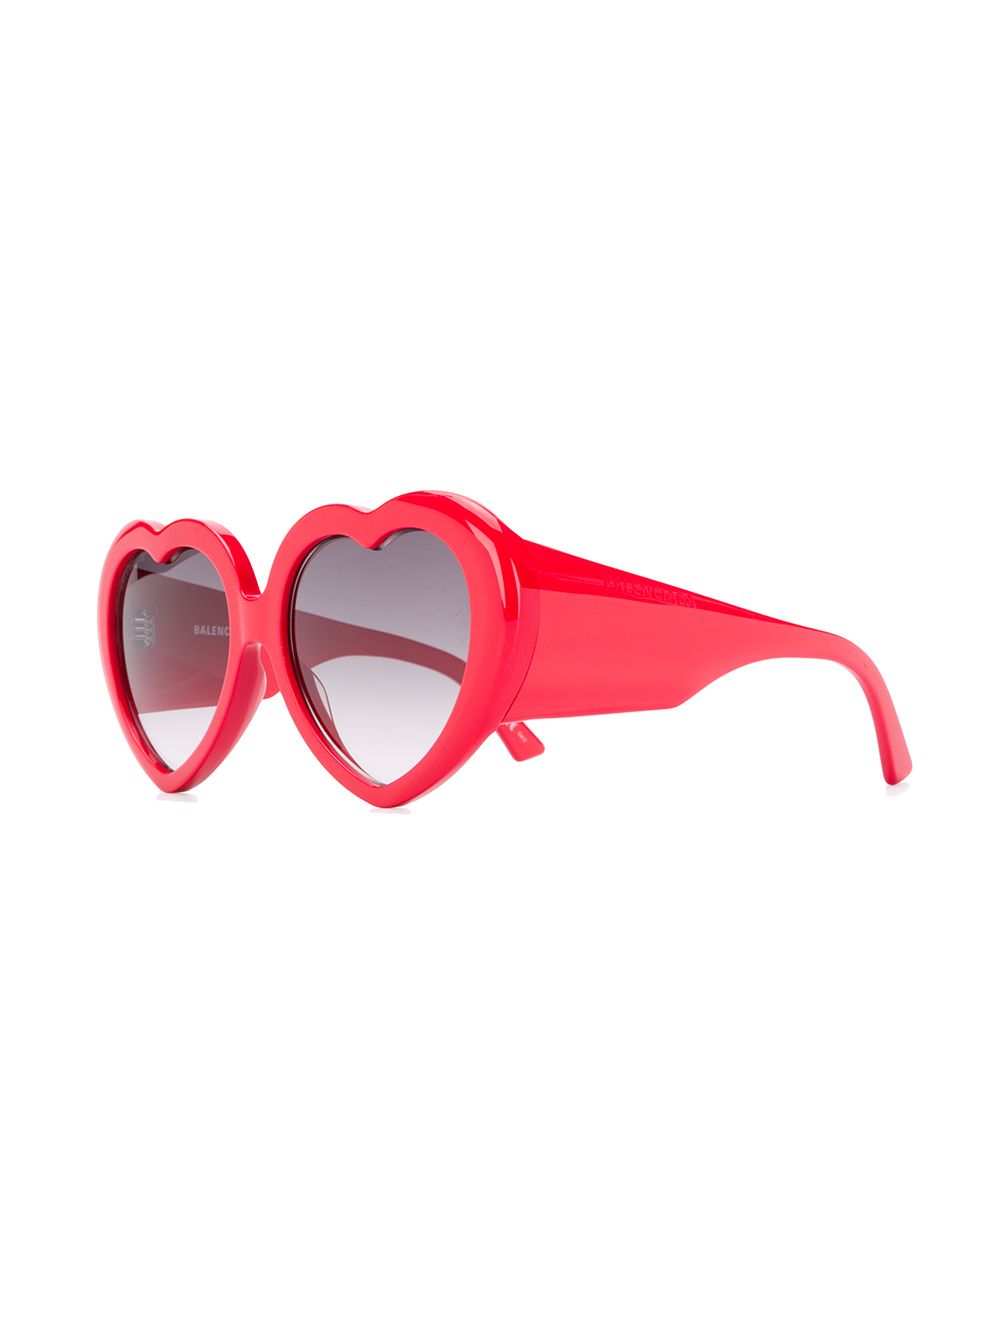 фото Balenciaga солнцезащитные очки Susi в оправе в форме сердца